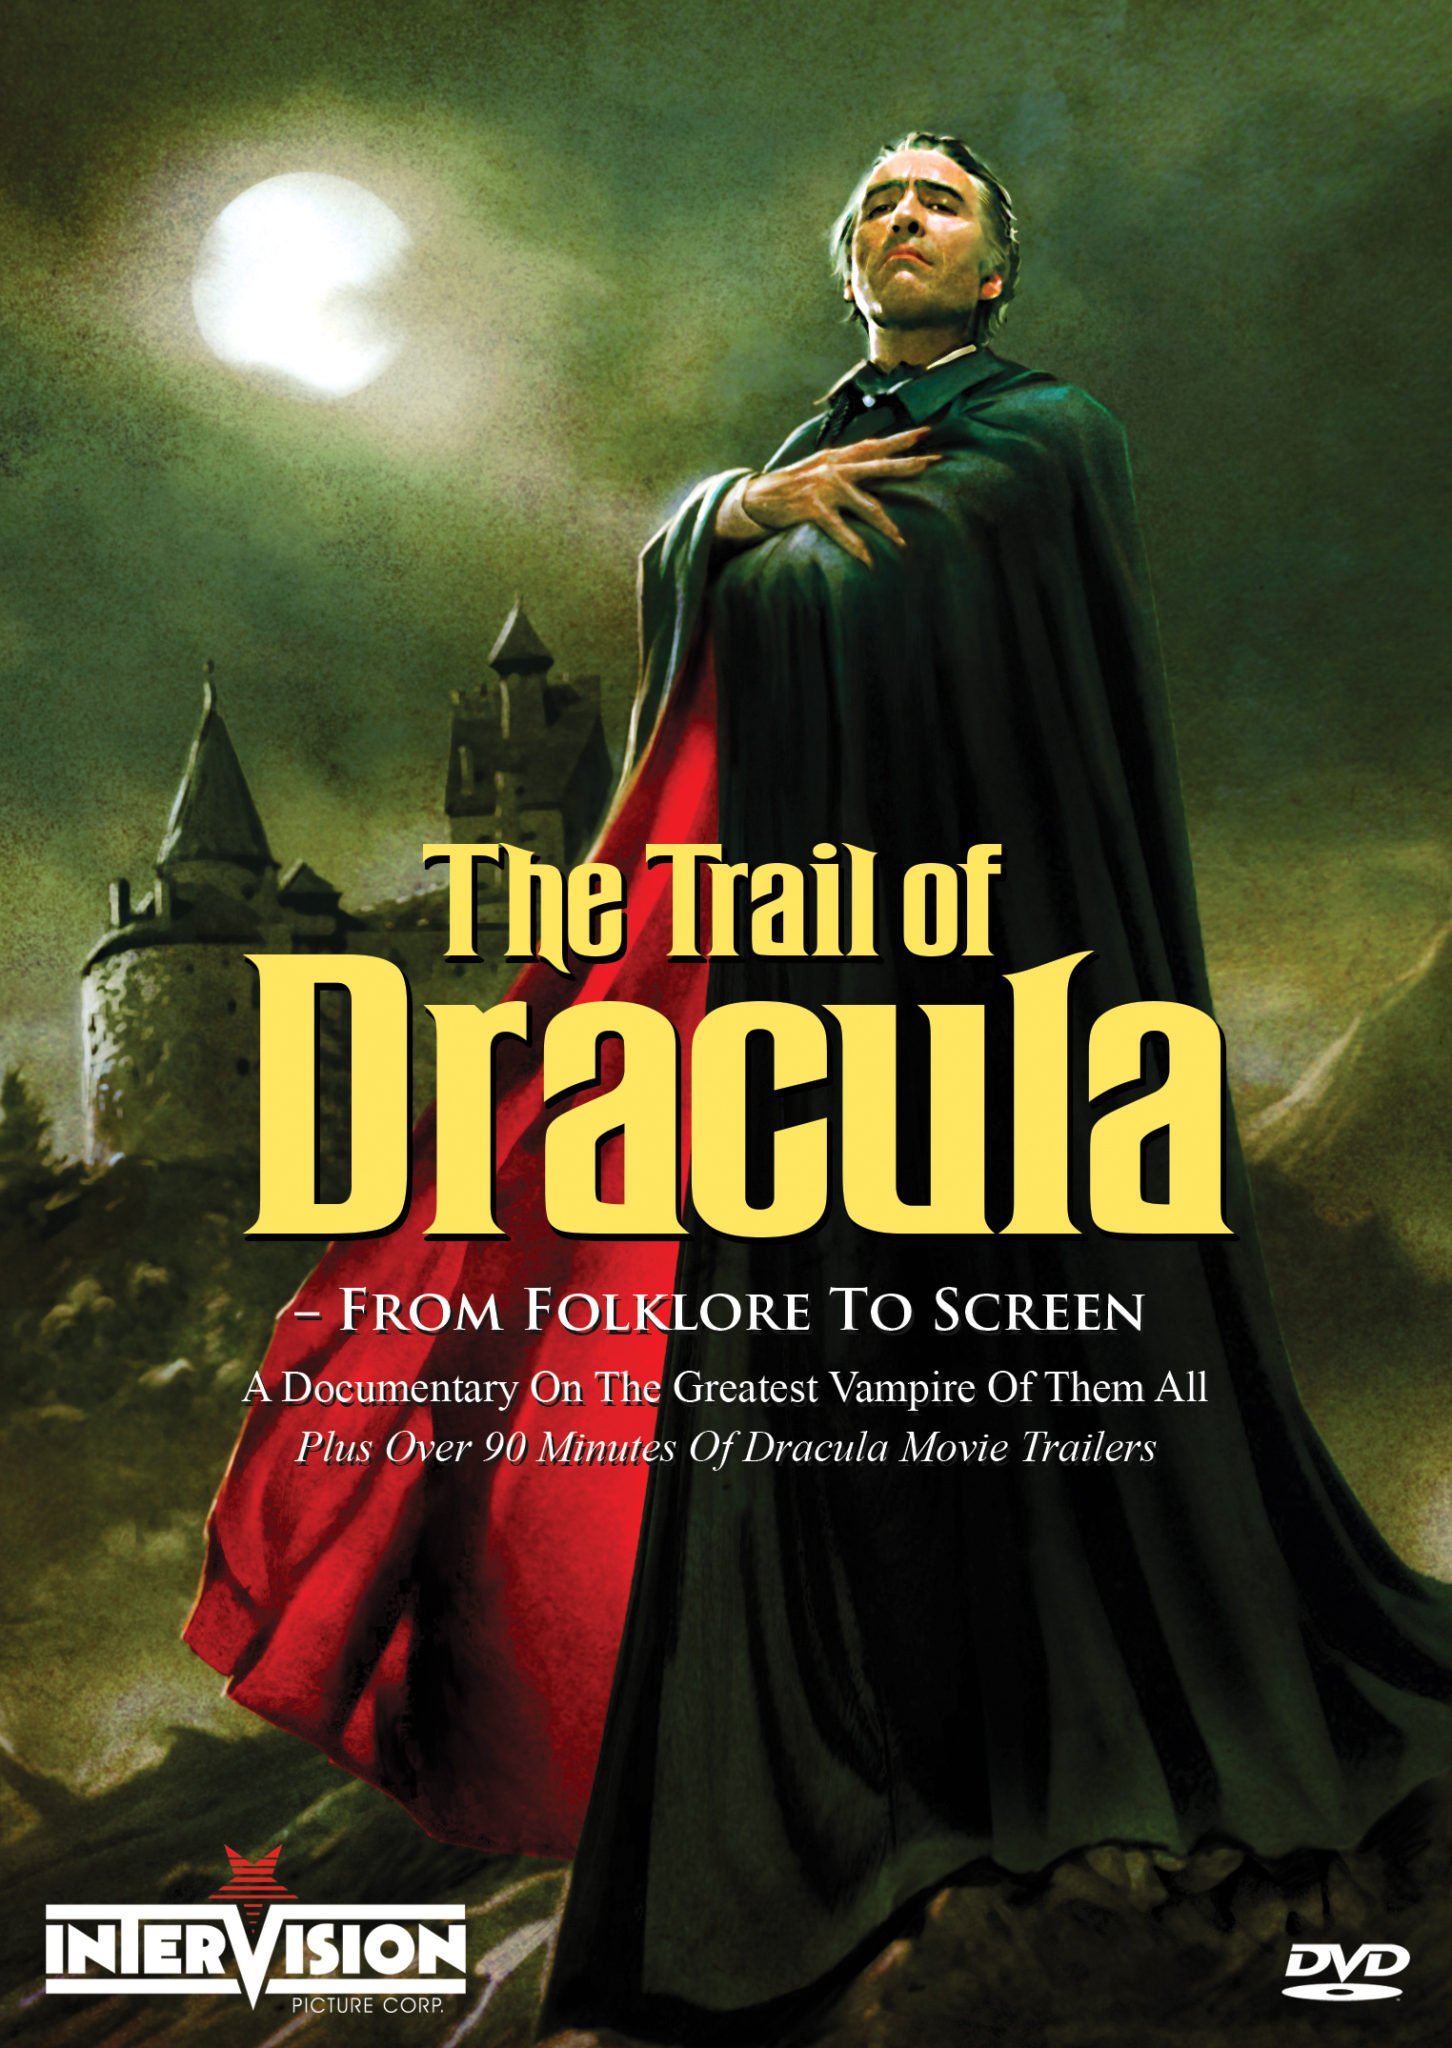 The Trail of Dracula - Review (Severin Films DVD) - In Poor Taste